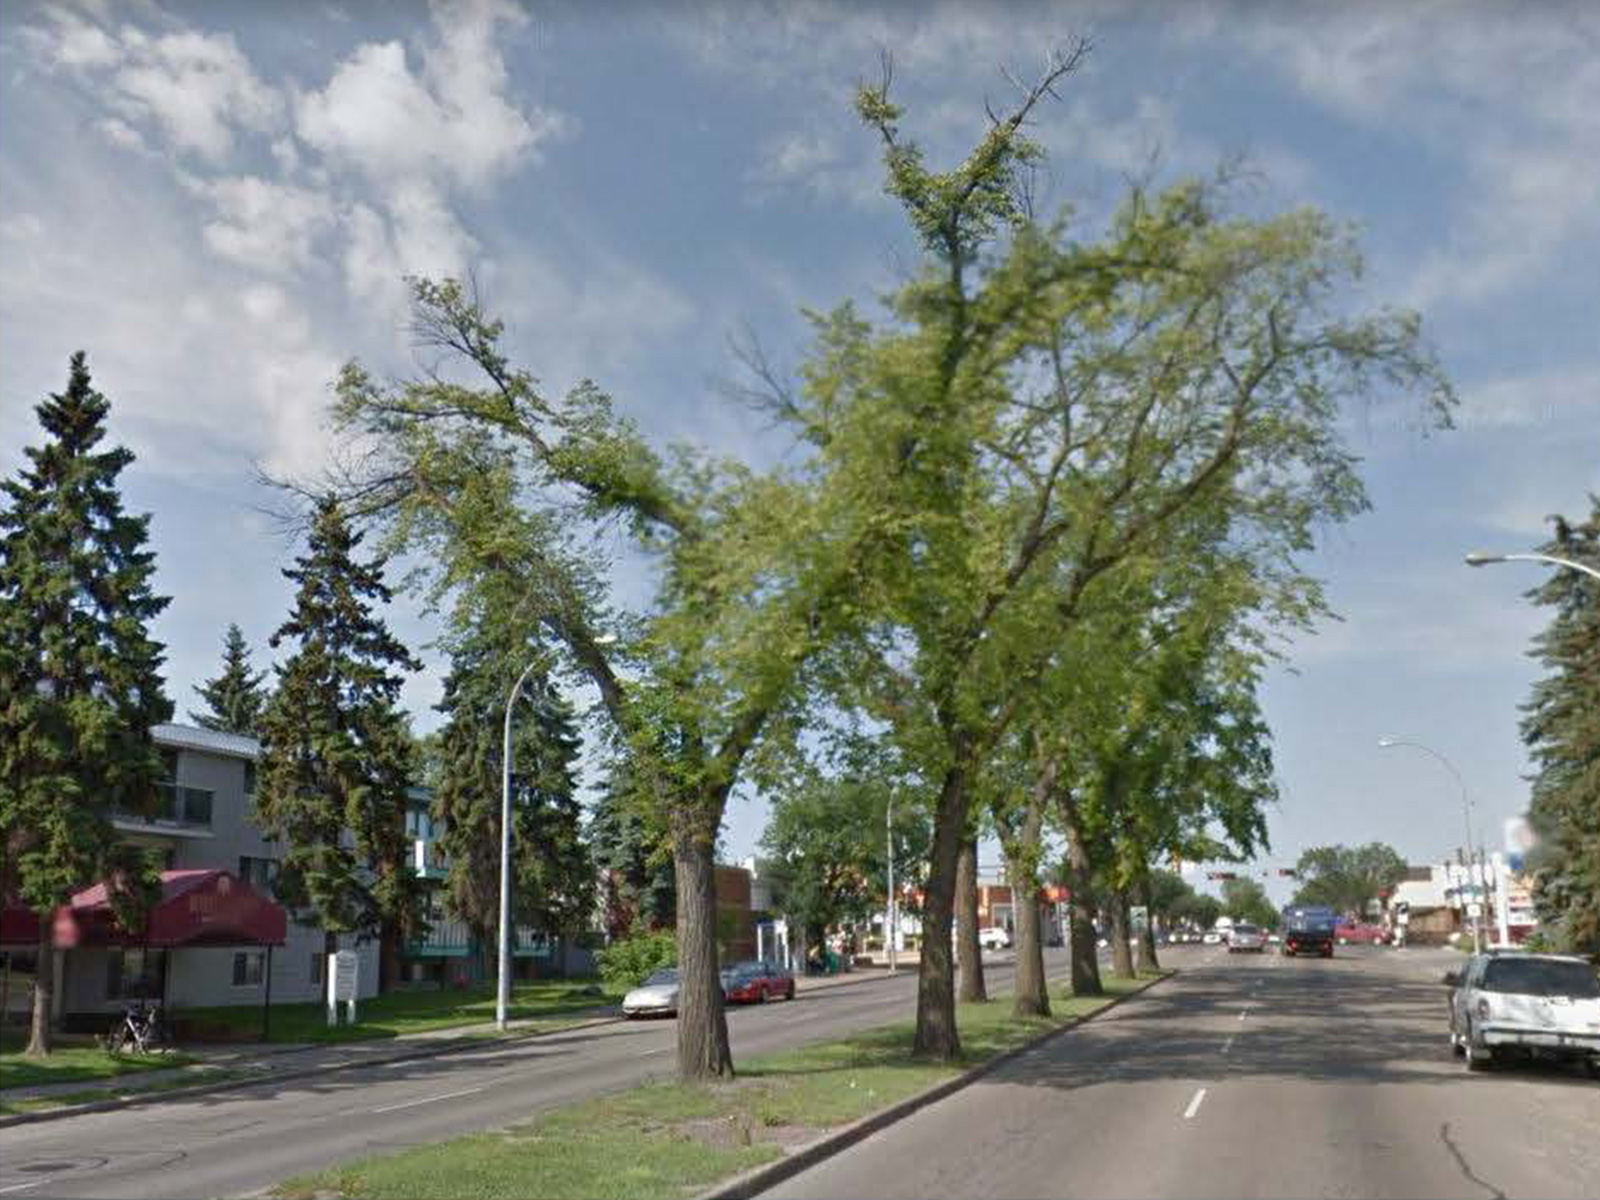 Median trees help calm traffic speeds in urban settings